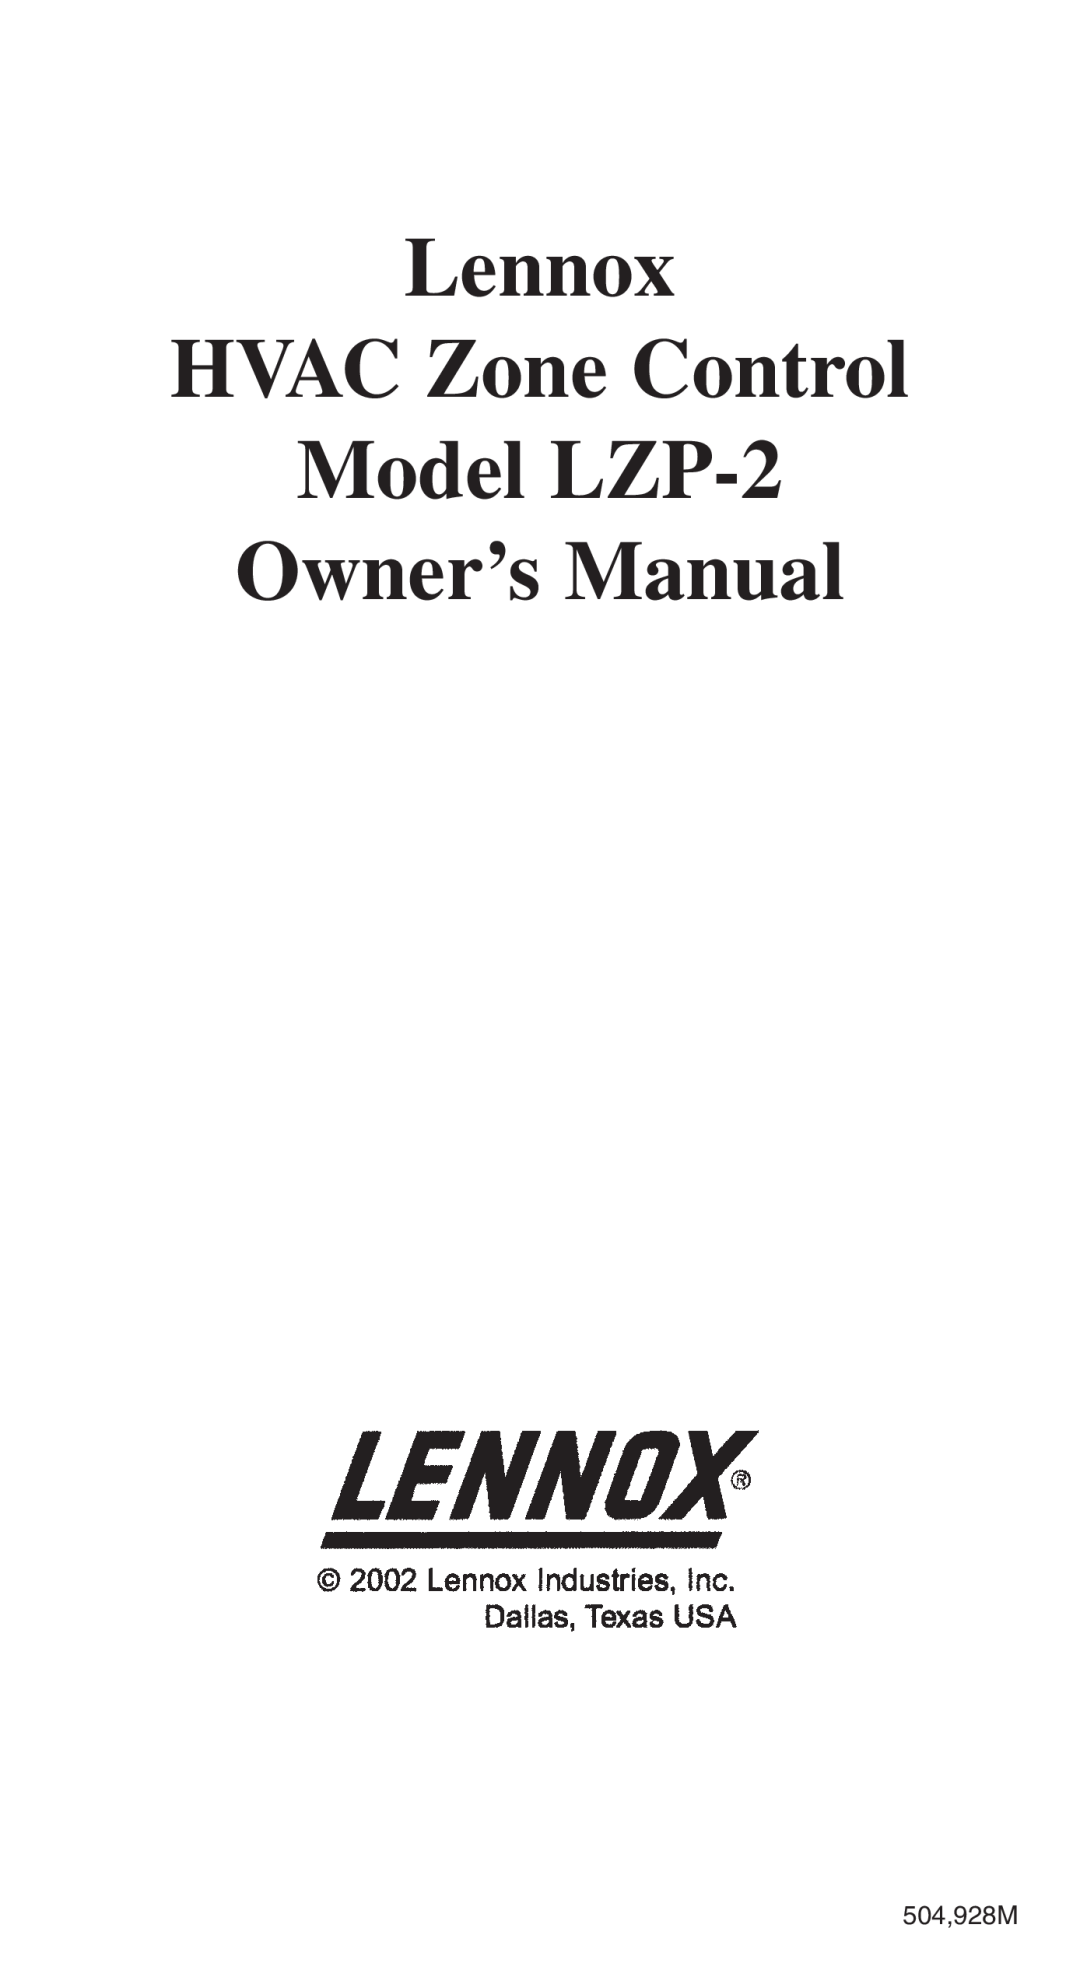 Lennox International Inc owner manual Lennox HVAC Zone Control Model LZP-2, 504,928M 